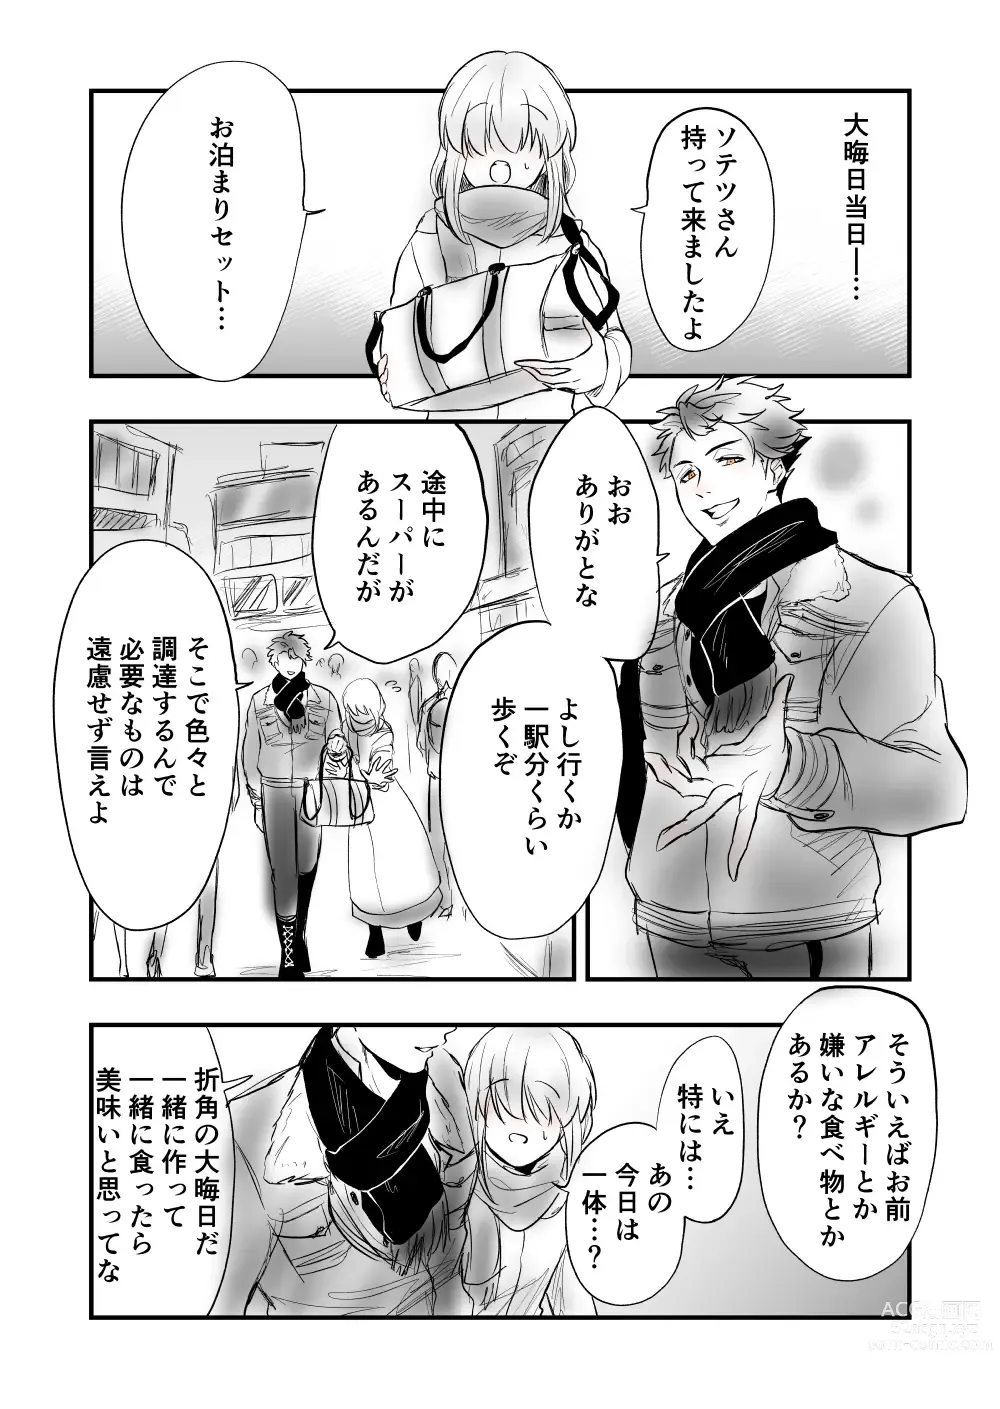 Page 3 of doujinshi 5